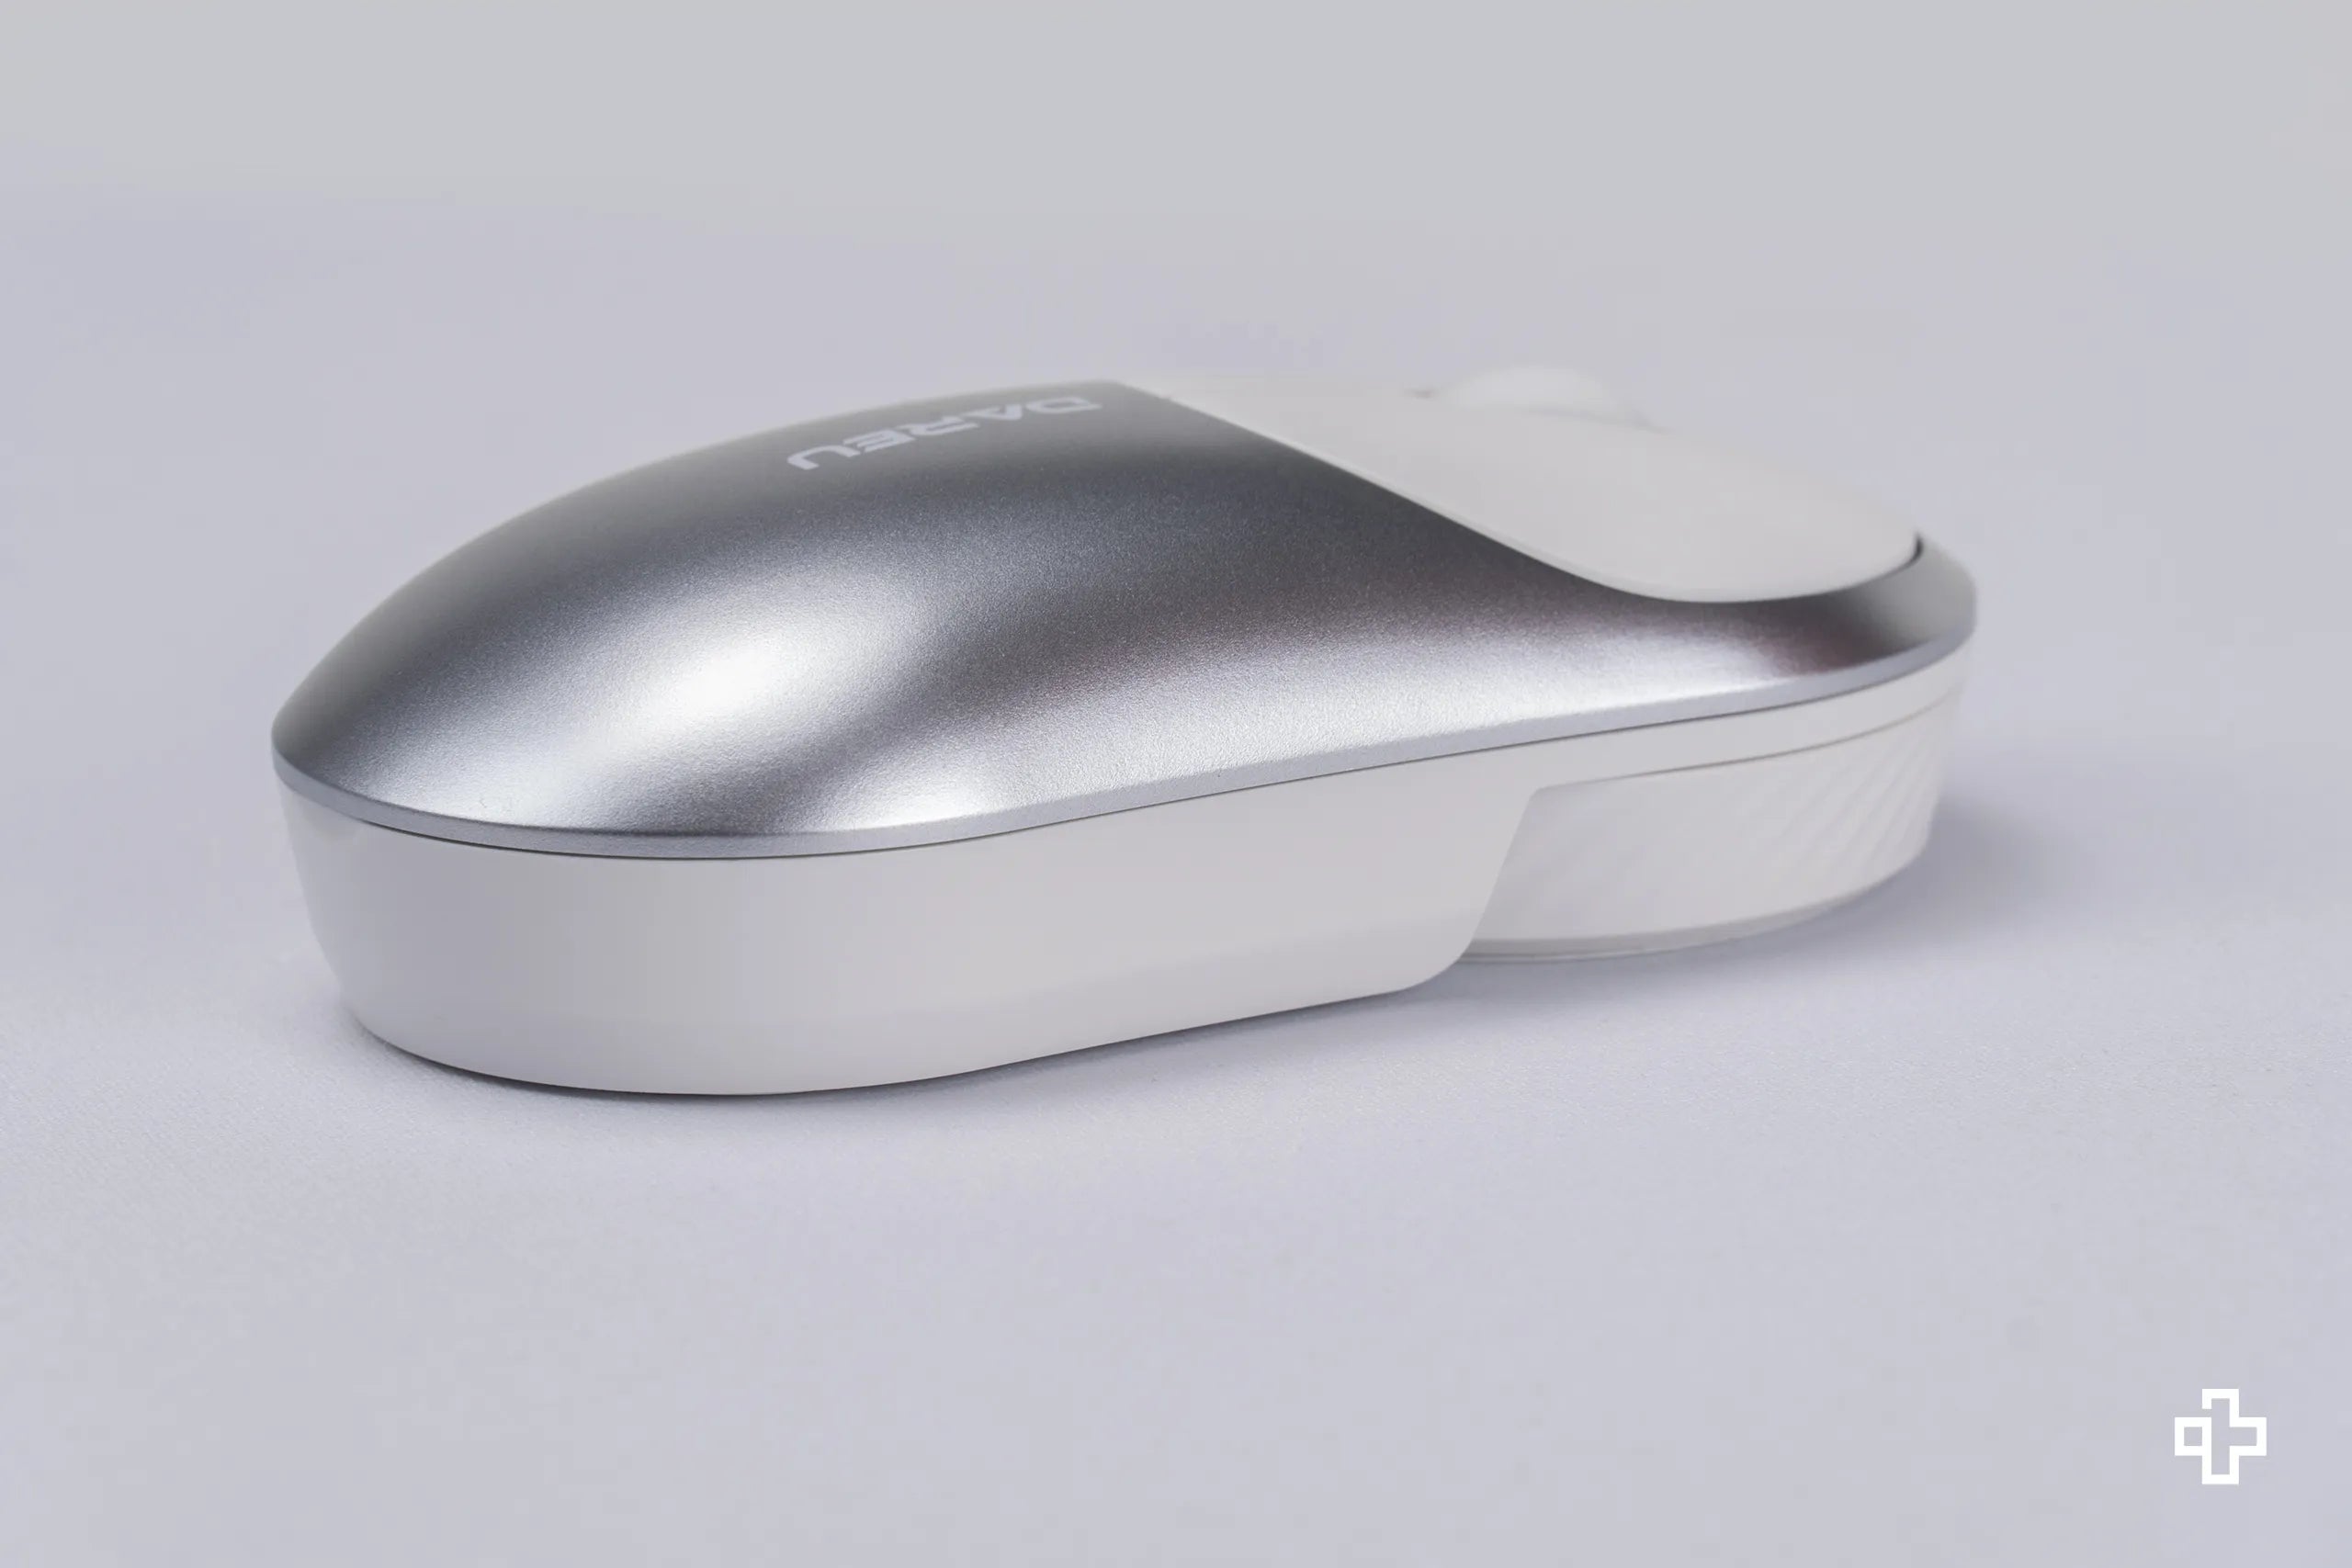 Mouse Dareu UFO Wireless Bluetooth Silent Office 